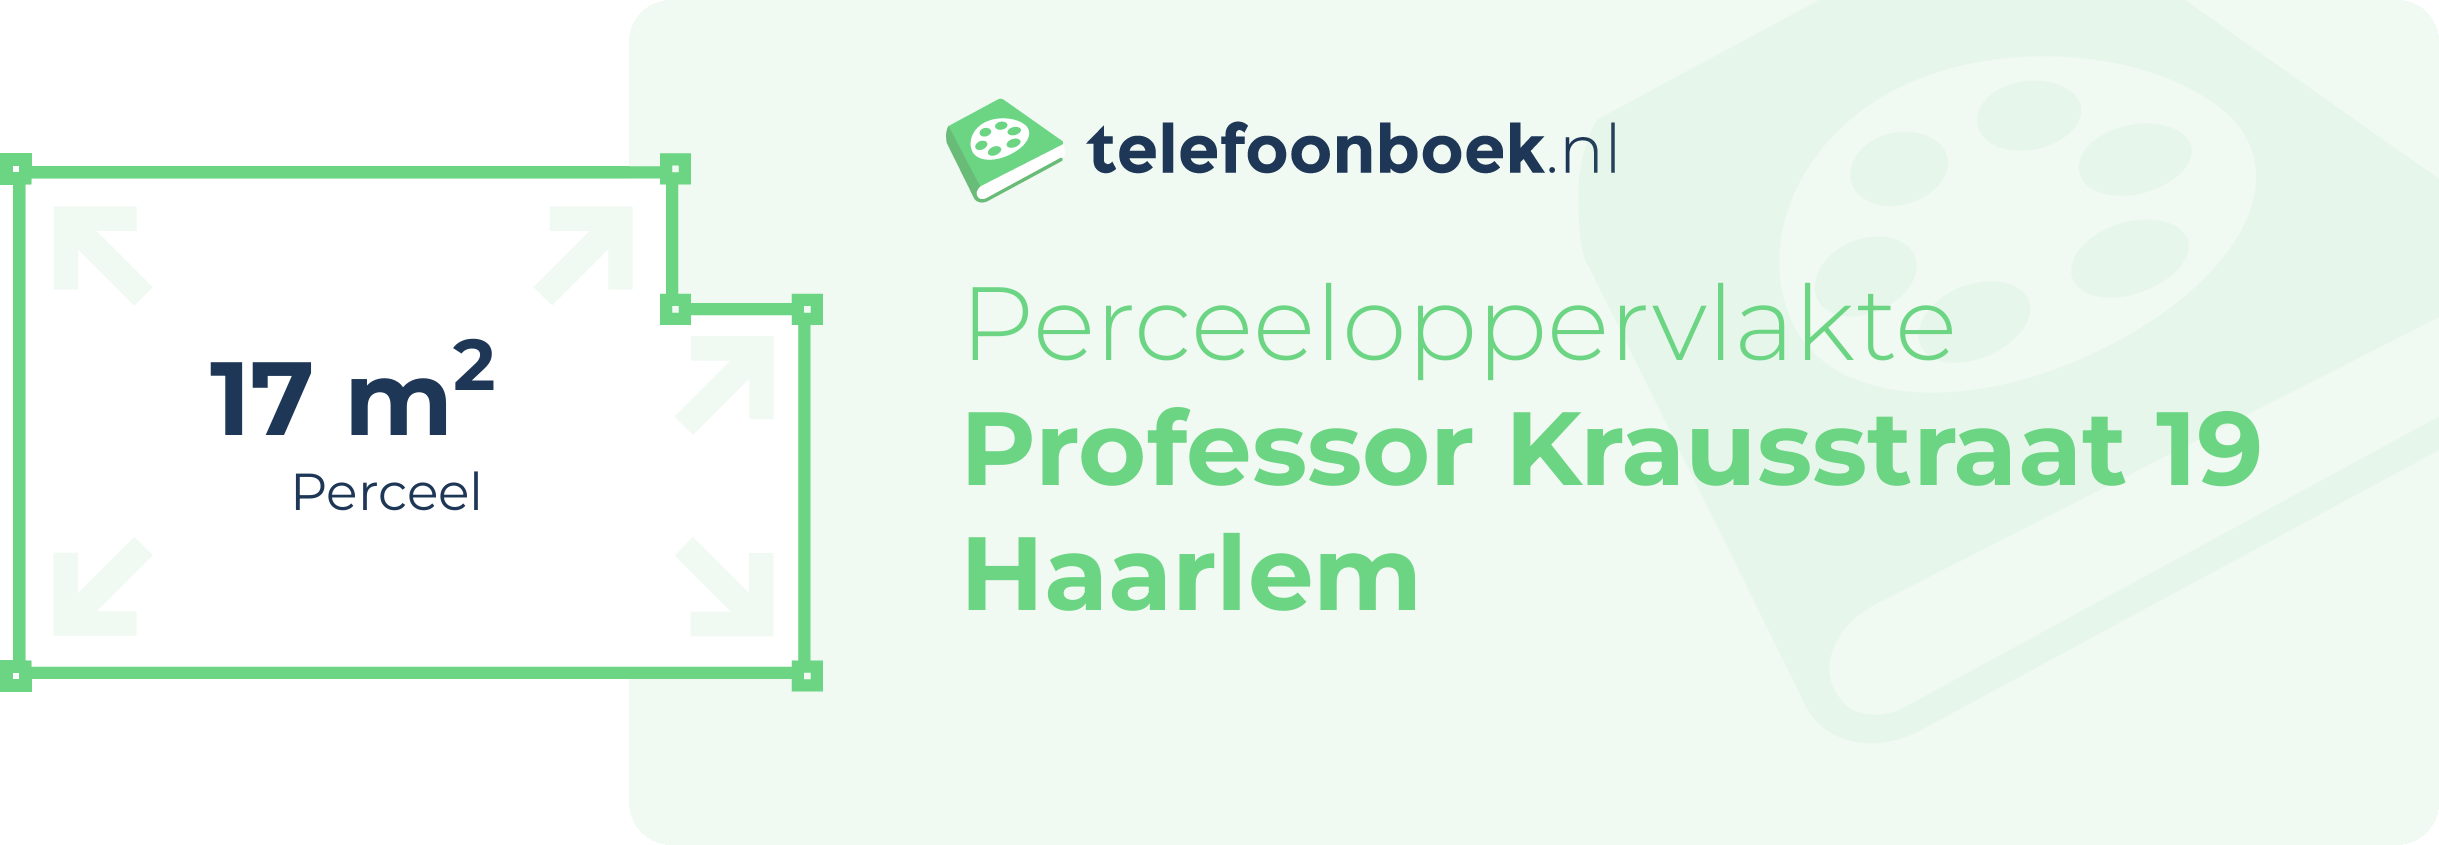 Perceeloppervlakte Professor Krausstraat 19 Haarlem